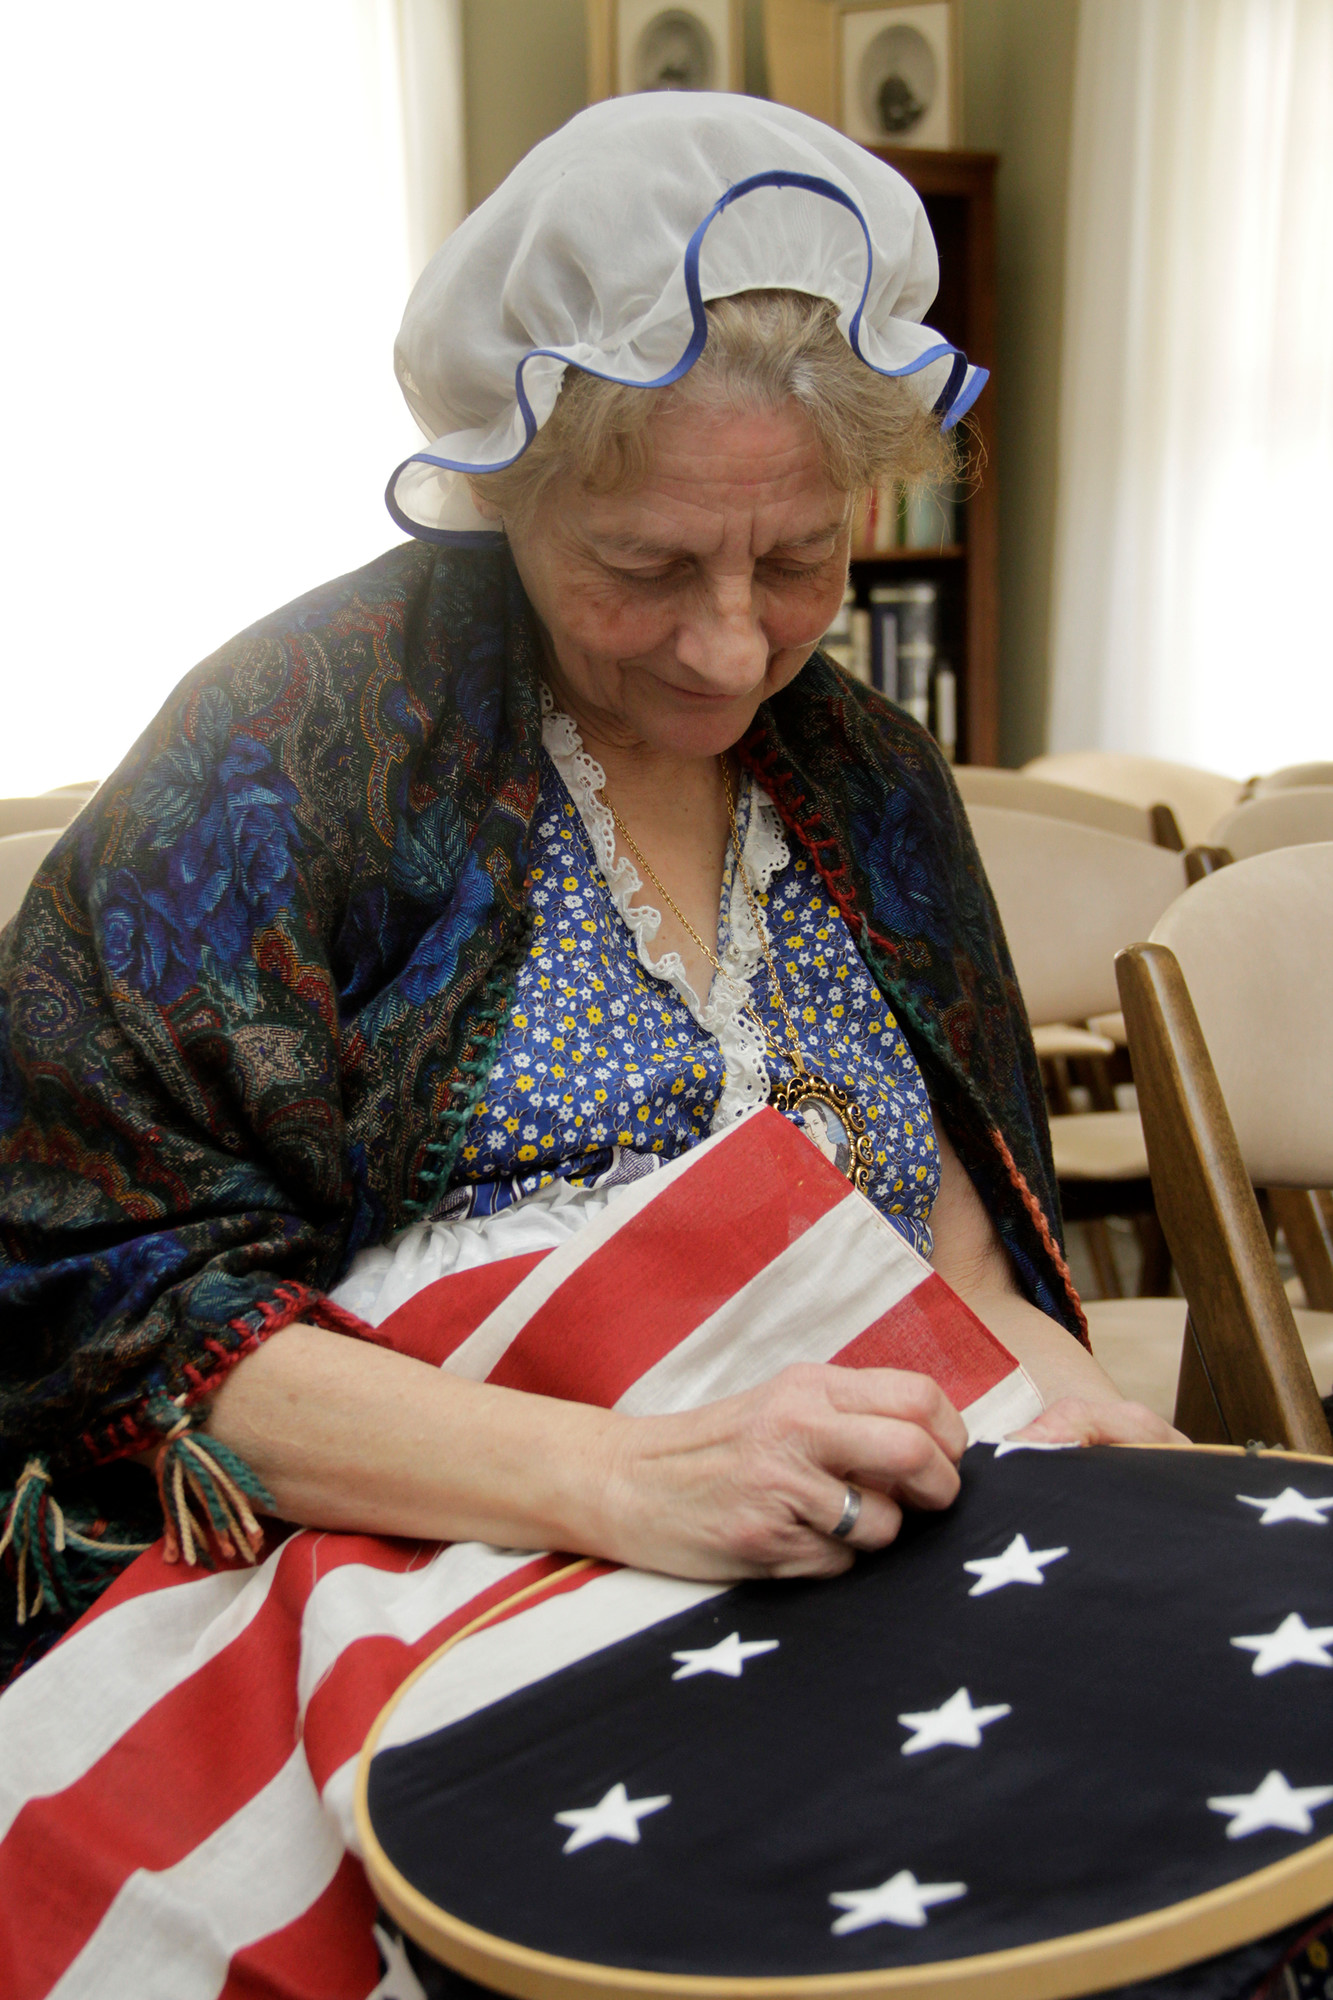 Betsy Ross, aka Catherine Dellis, sewed her flag.